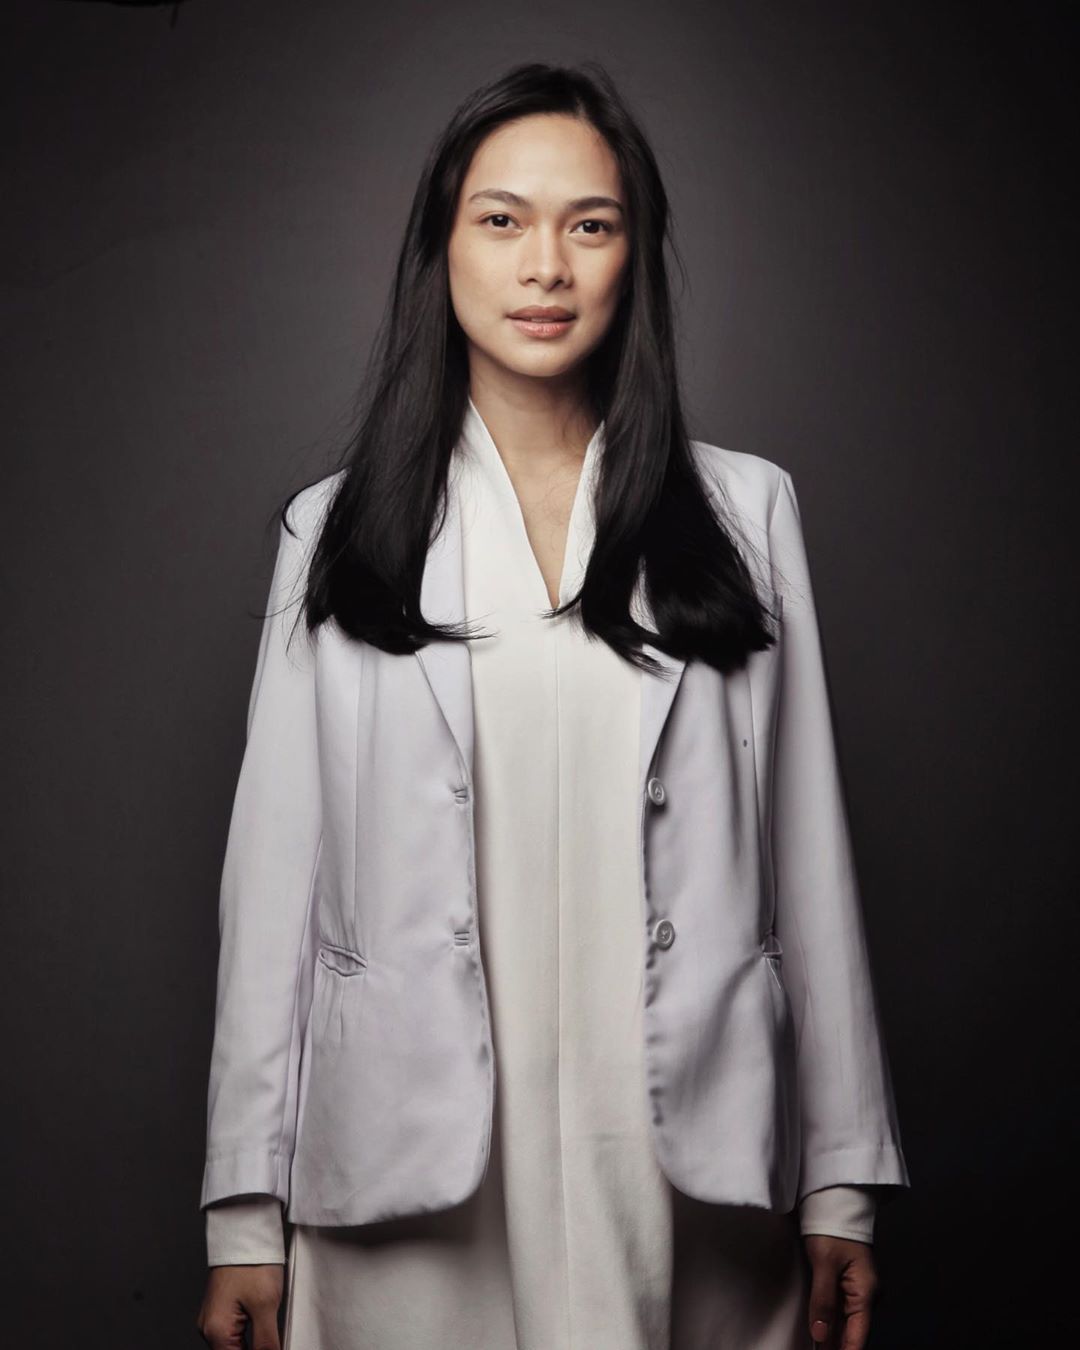 Maesty Ariotedjo, Dokter dan Model Cantik